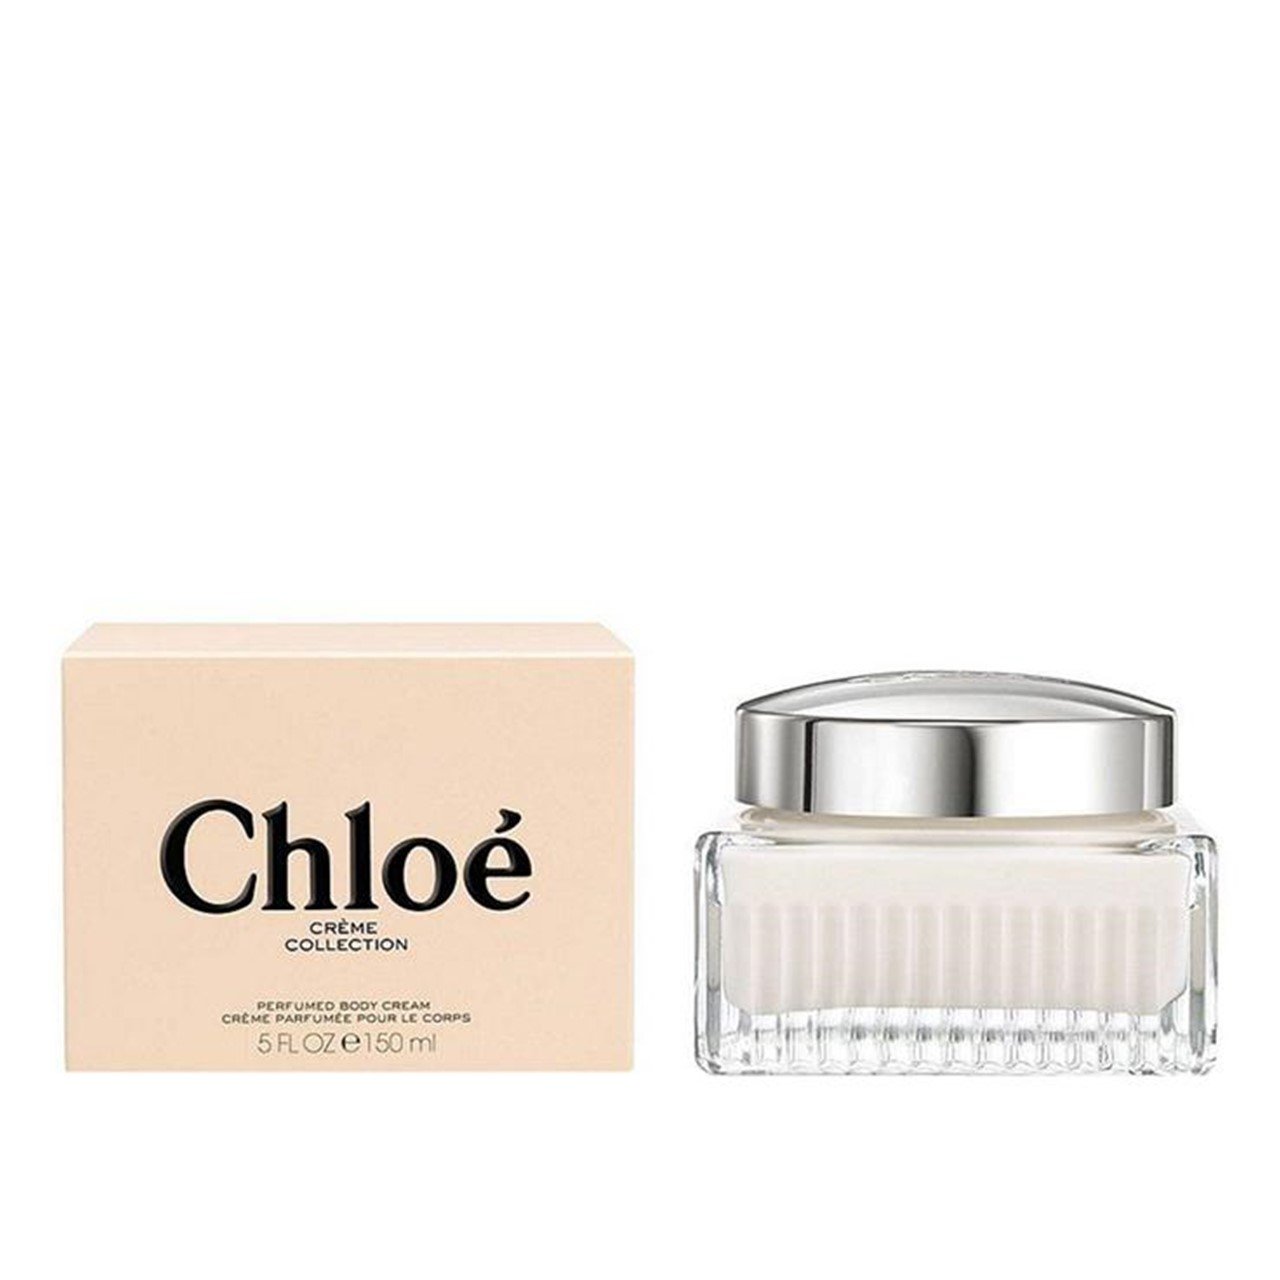 Buy Chloé Crème Collection Perfumed Body Cream 150ml · Mauritius